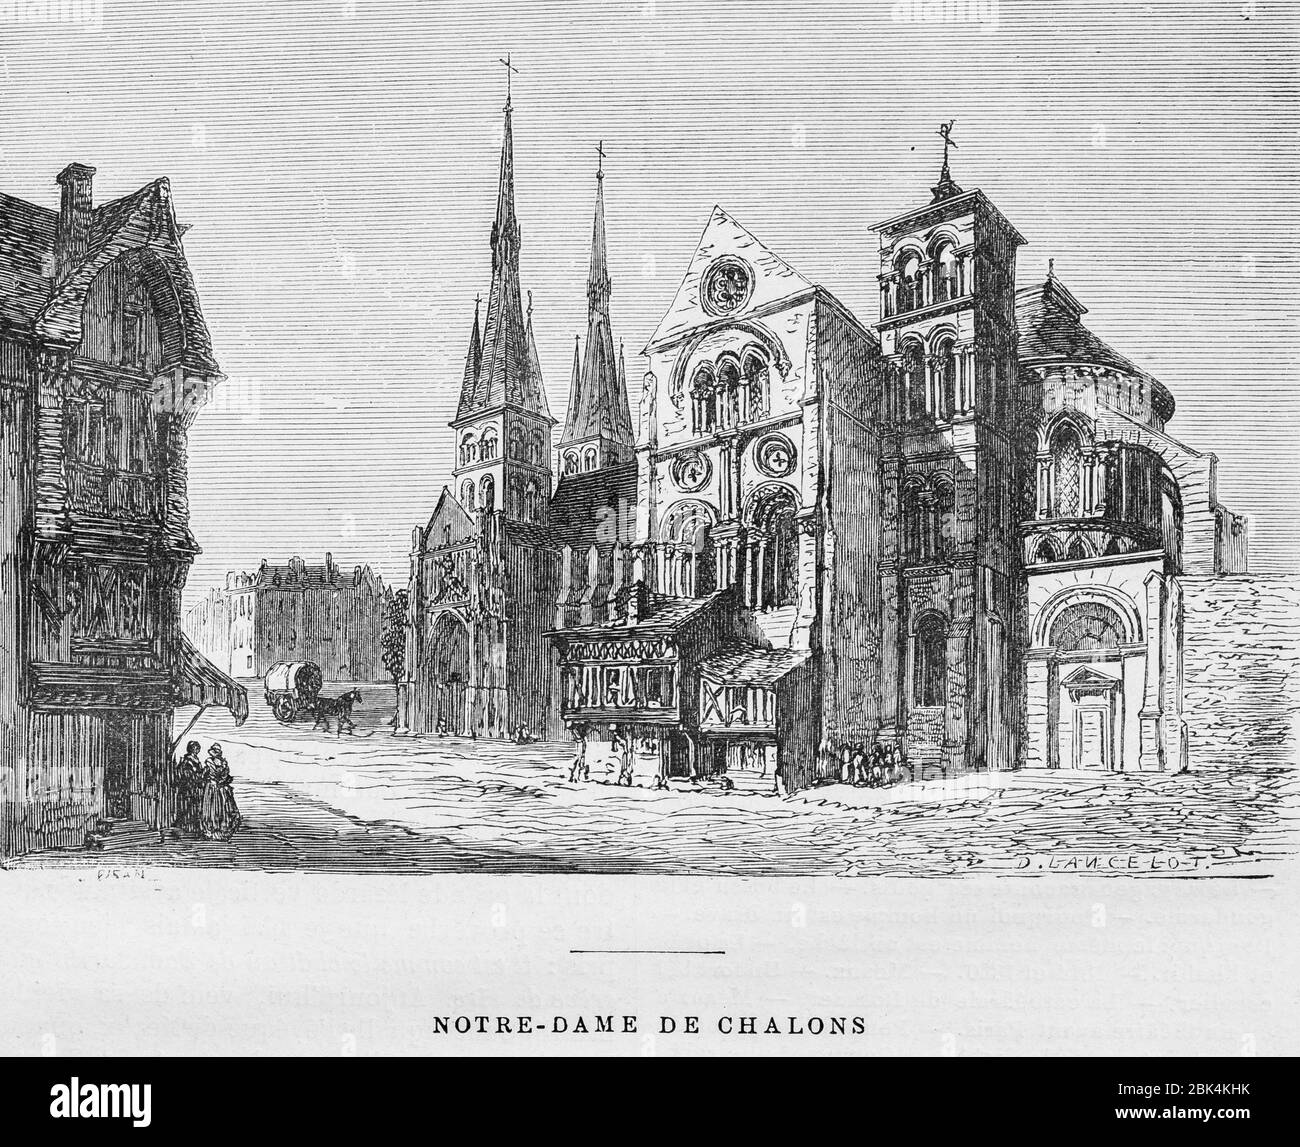 Notre-Dame de Chalons,Chalons-en-Champagne, France Le Rhin by Victor Hugo, Paris about 1843 Stock Photo